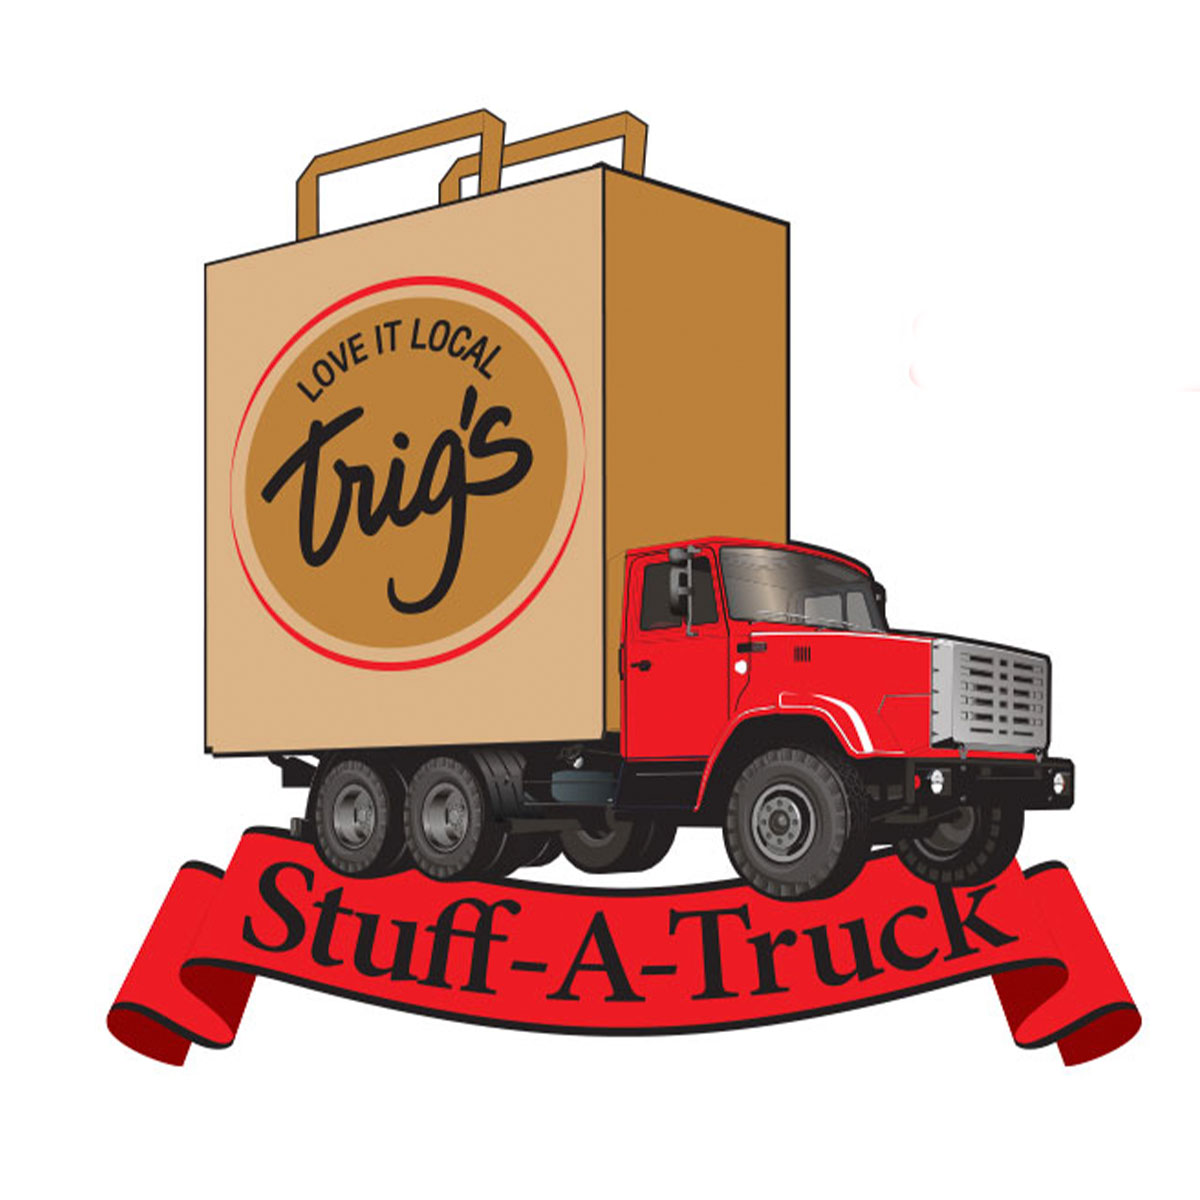 Trig's Stuff-A-Truck Logo image.